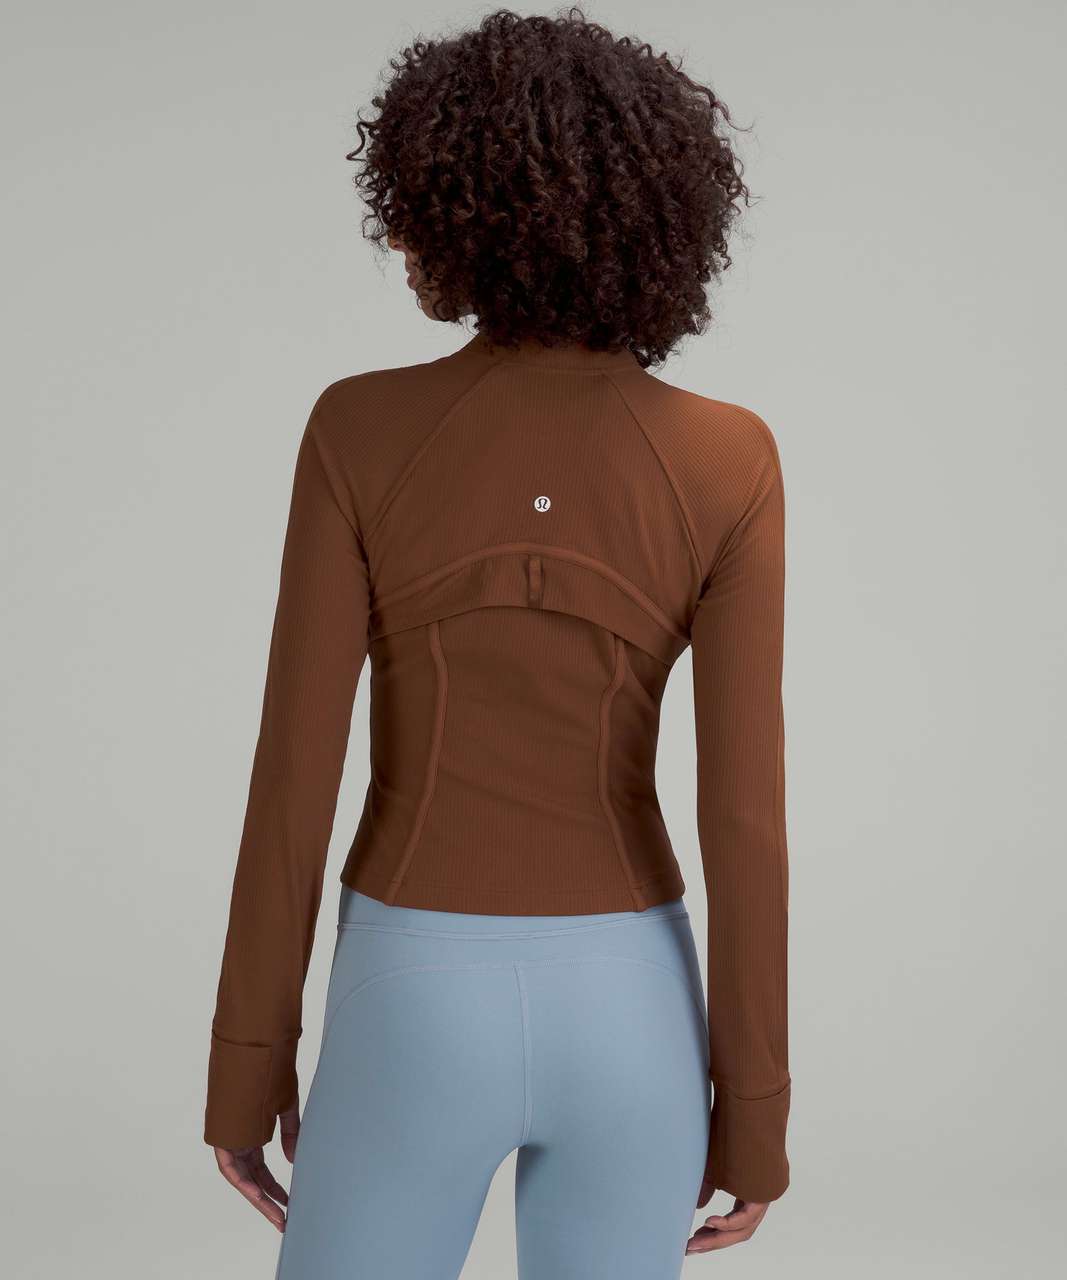 NWT Lululemon Define Jacket Size 6 Roasted Brown Sold Out!